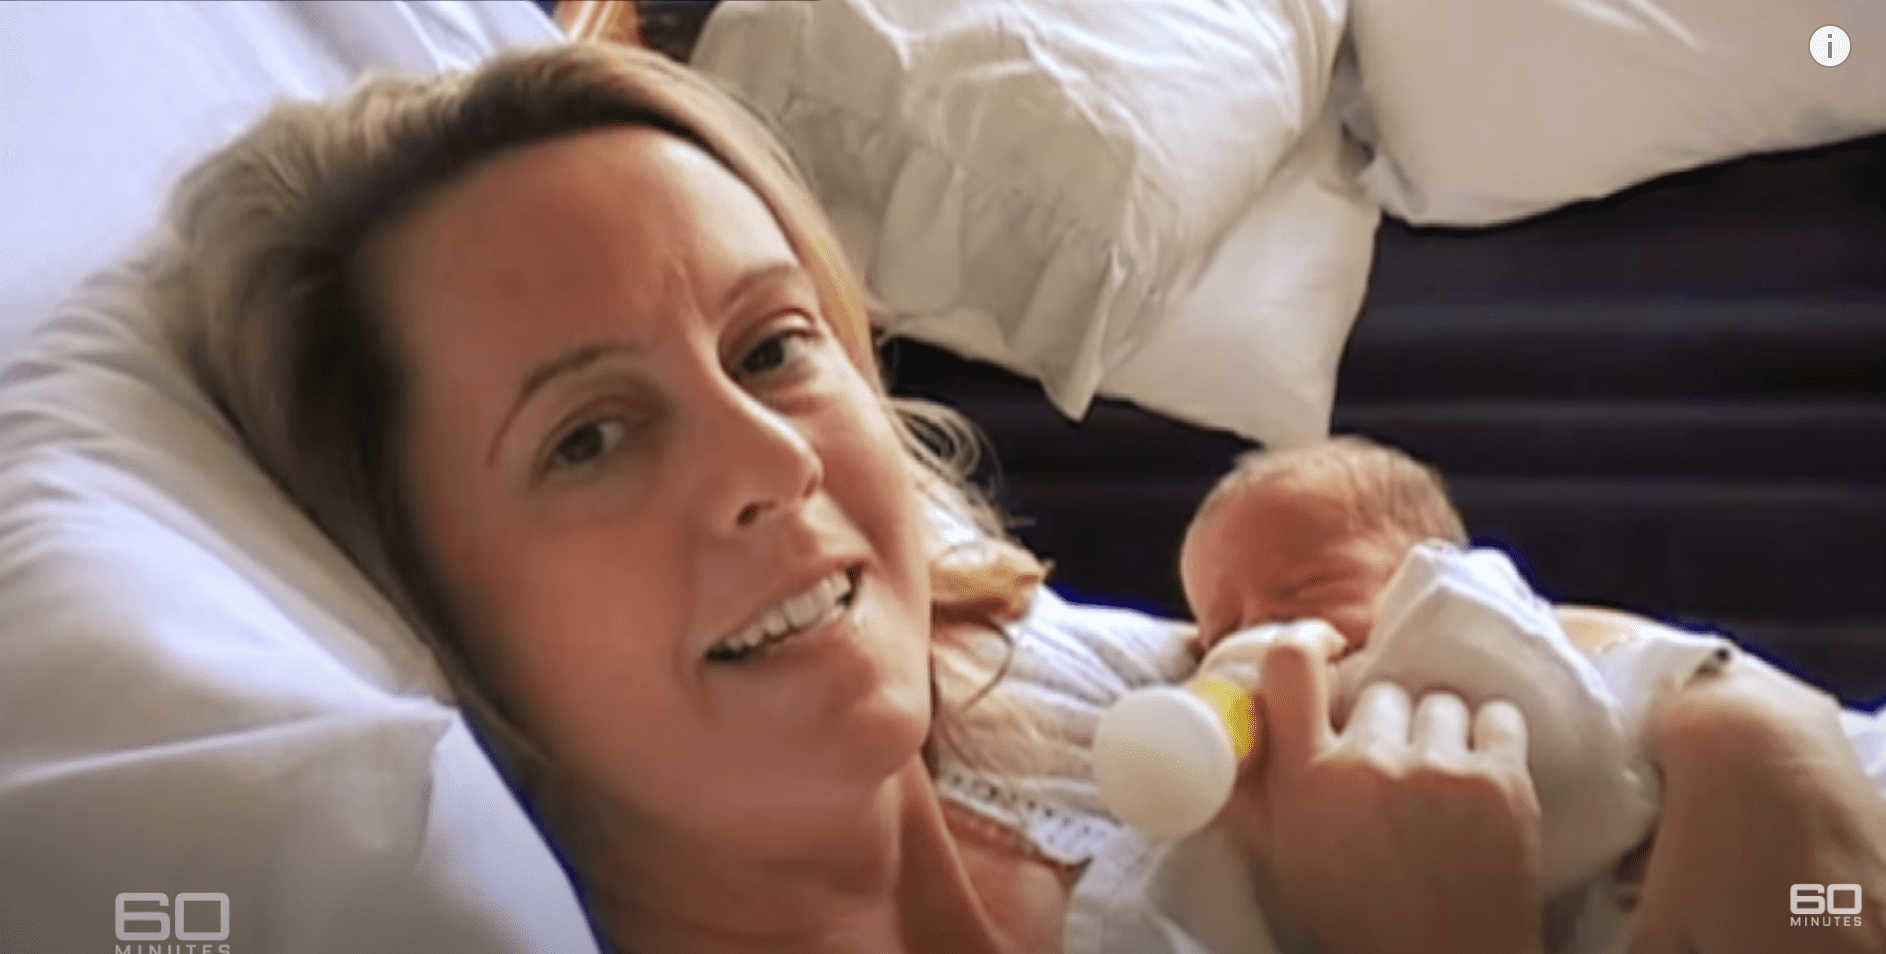 Carolyn Savage feeding baby Logan after birth. | Source: youtube.com/60 Minutes Australia